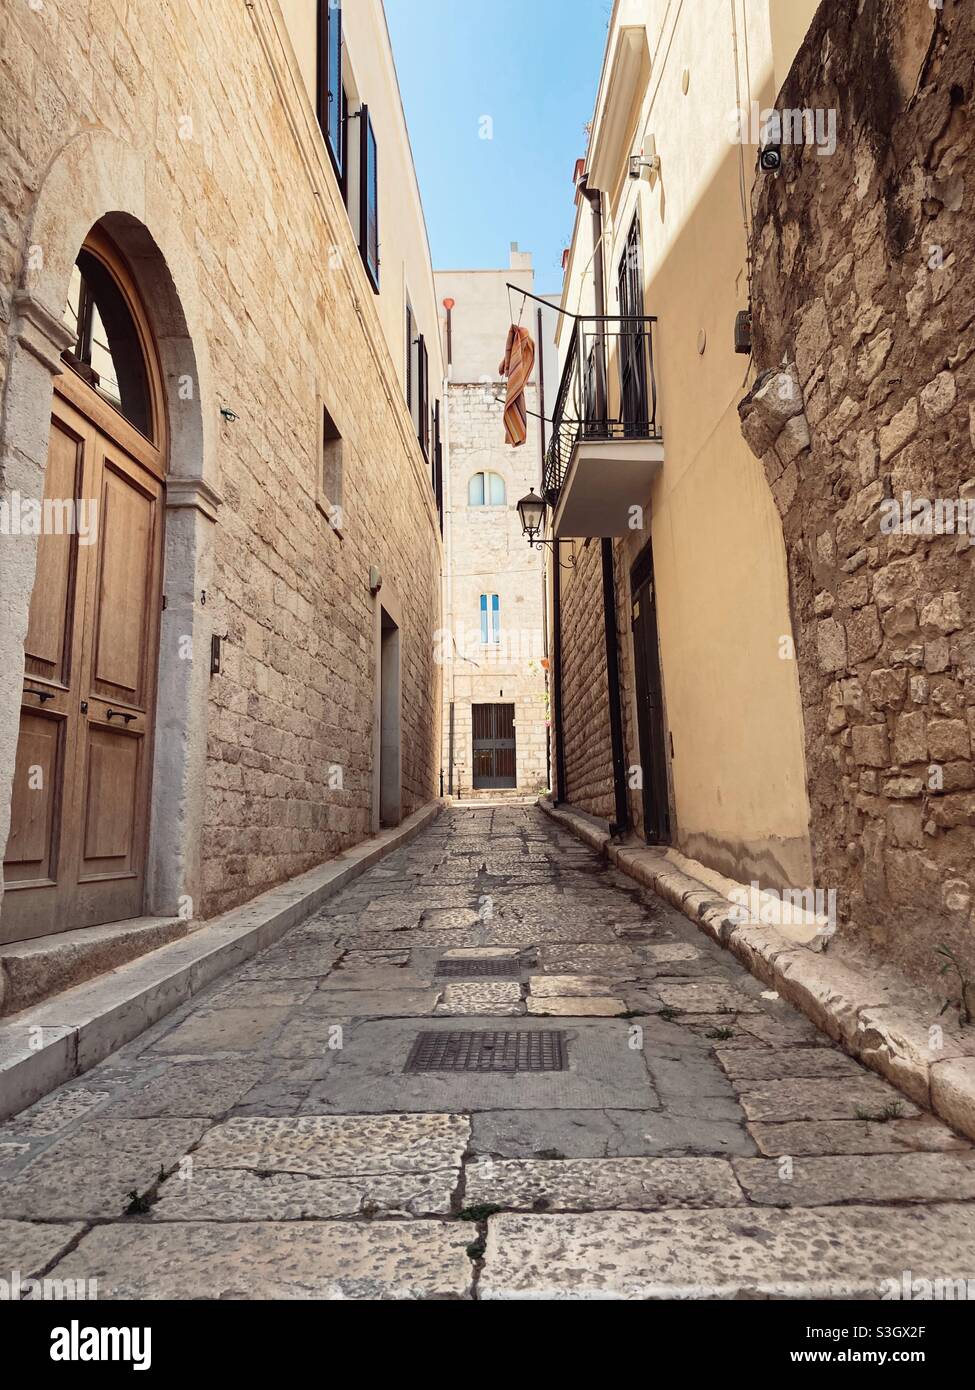 An alley in Trani, Puglia, Italy Stock Photo